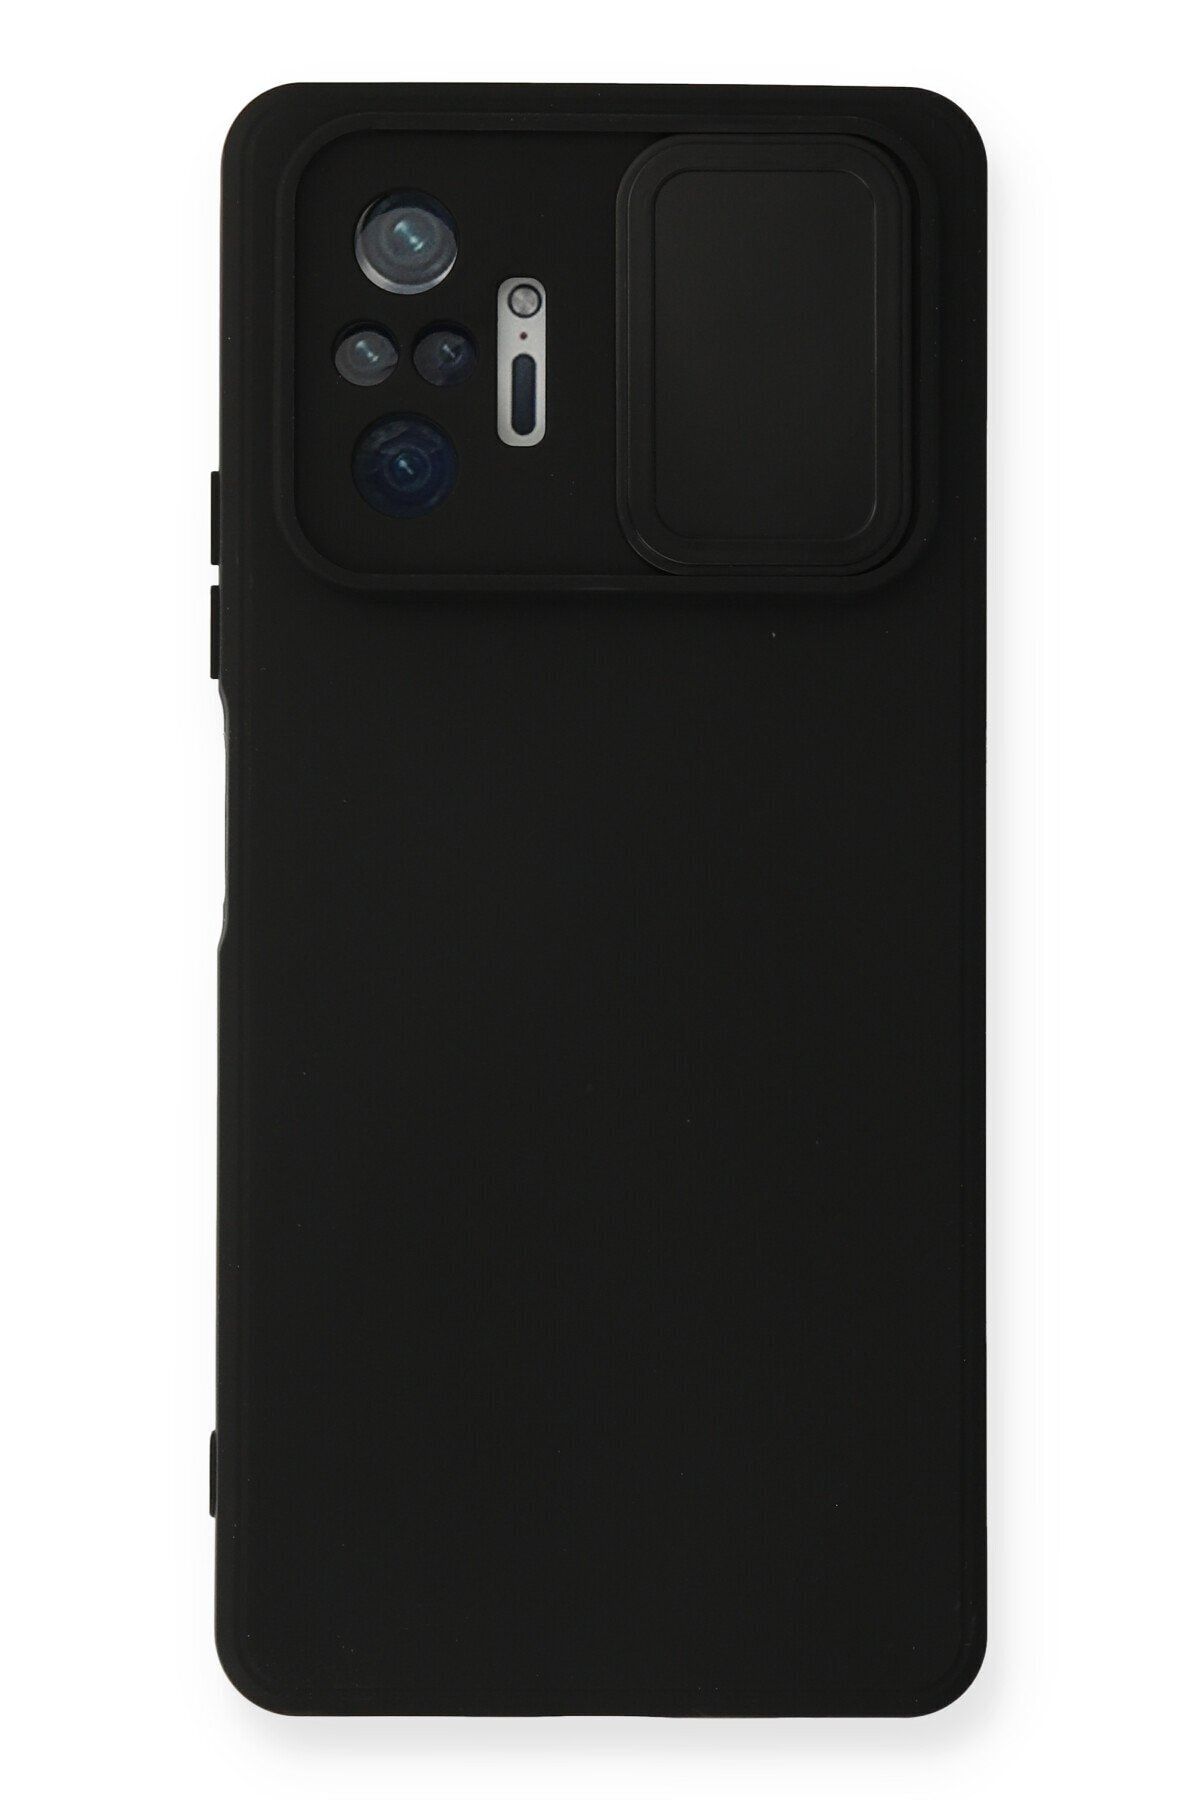 NewFace Xiaomi Redmi Note 10 Pro Uyumlu Kılıf Color Lens Soft Yüzeyli Silikon Kılıf - Siyah.